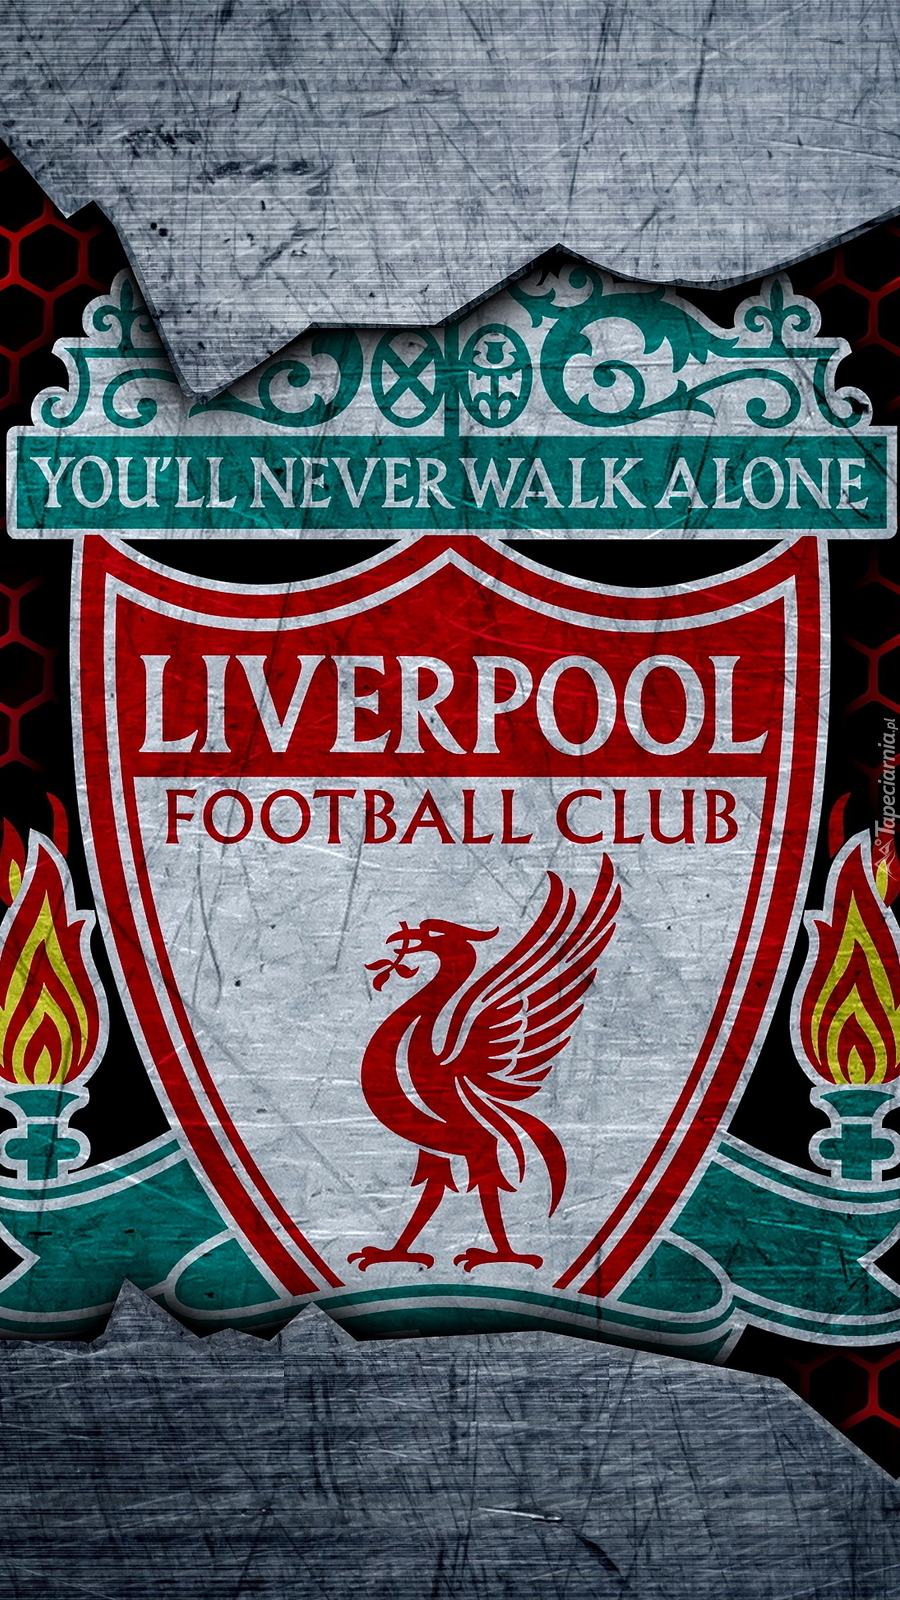 Logo Liverpool F.C